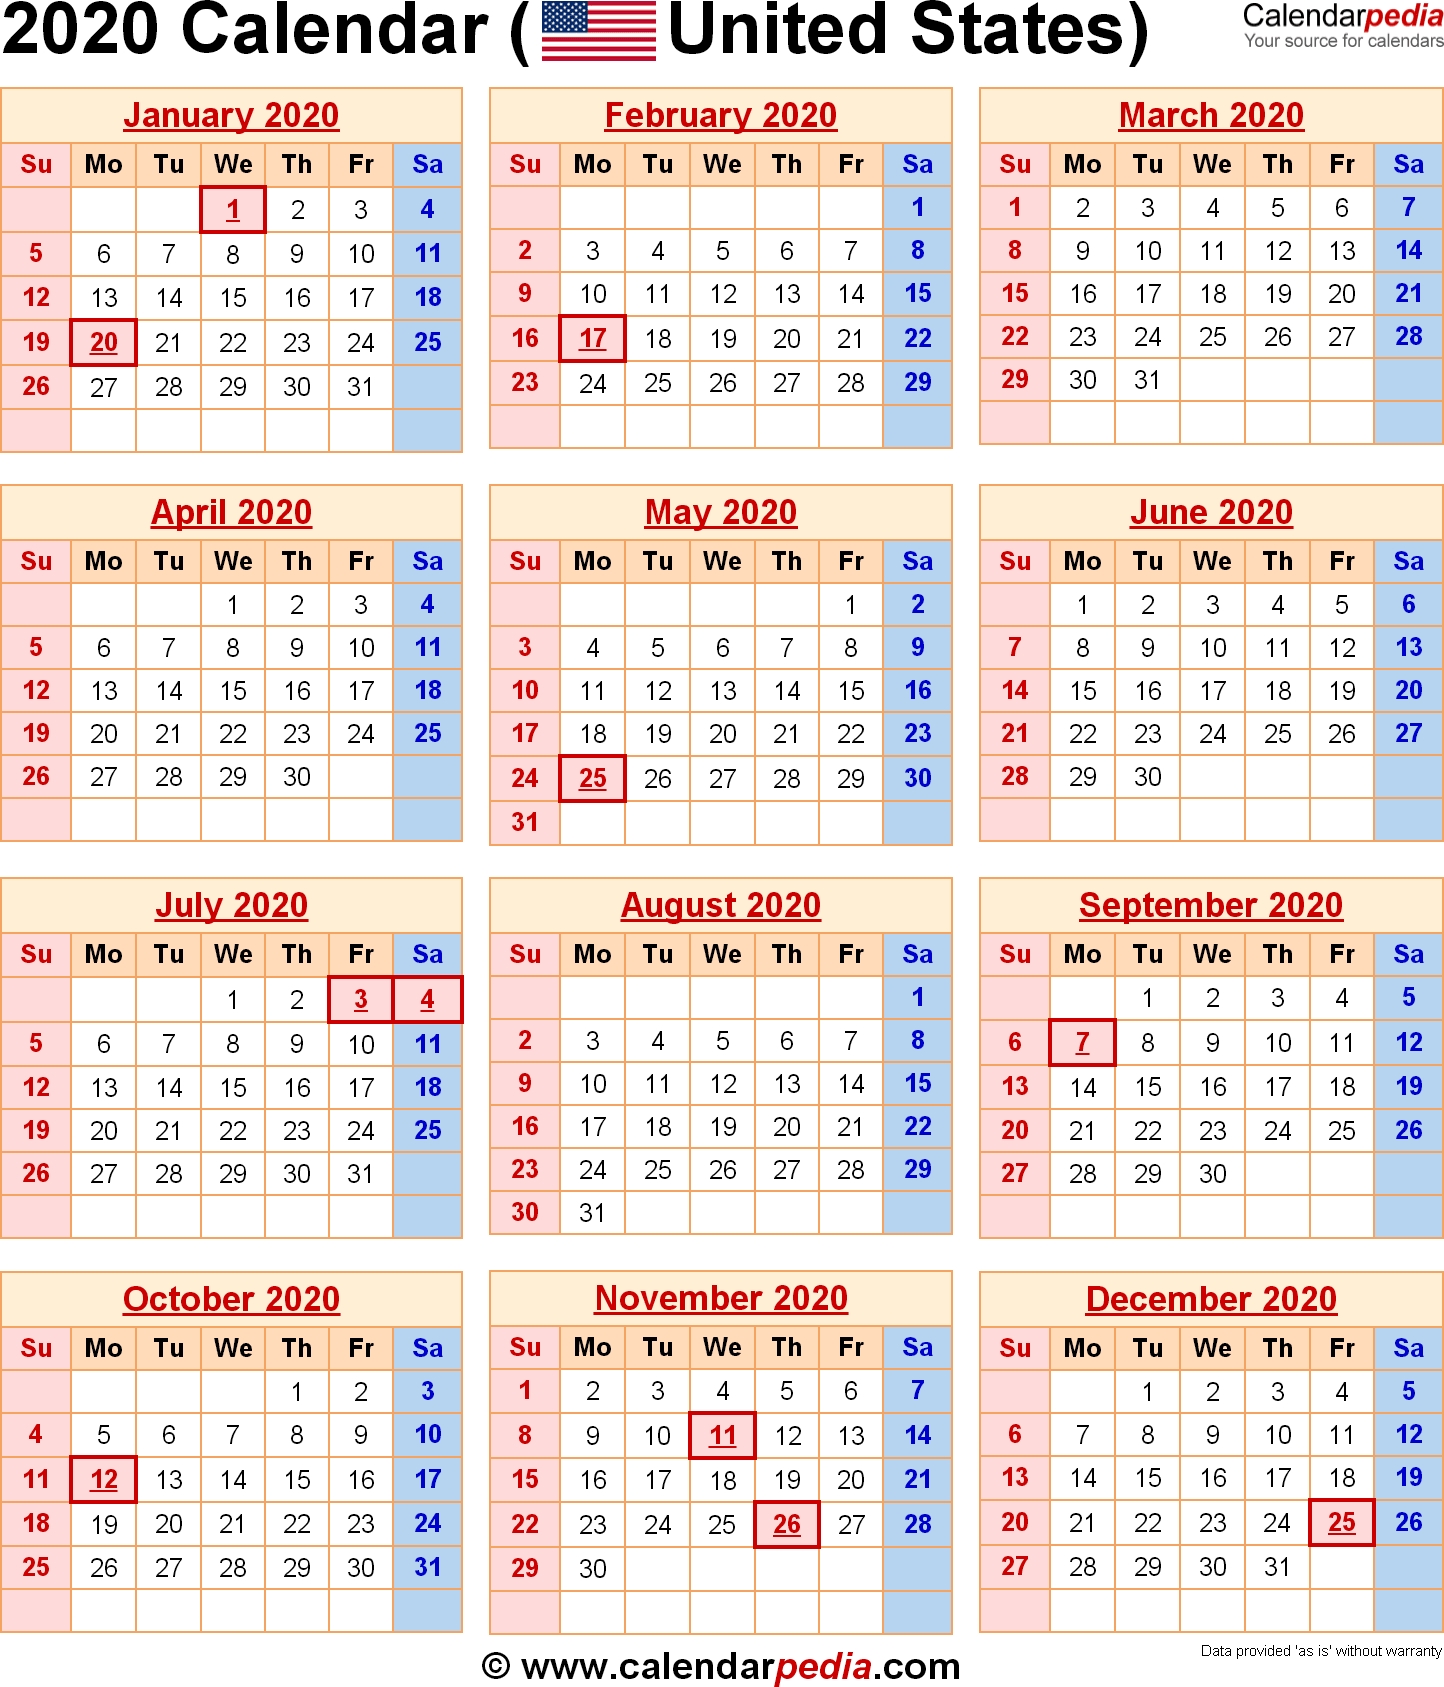 2020 Calendar With Federal Holidays 2020 Calendar Showing Federal Holidays